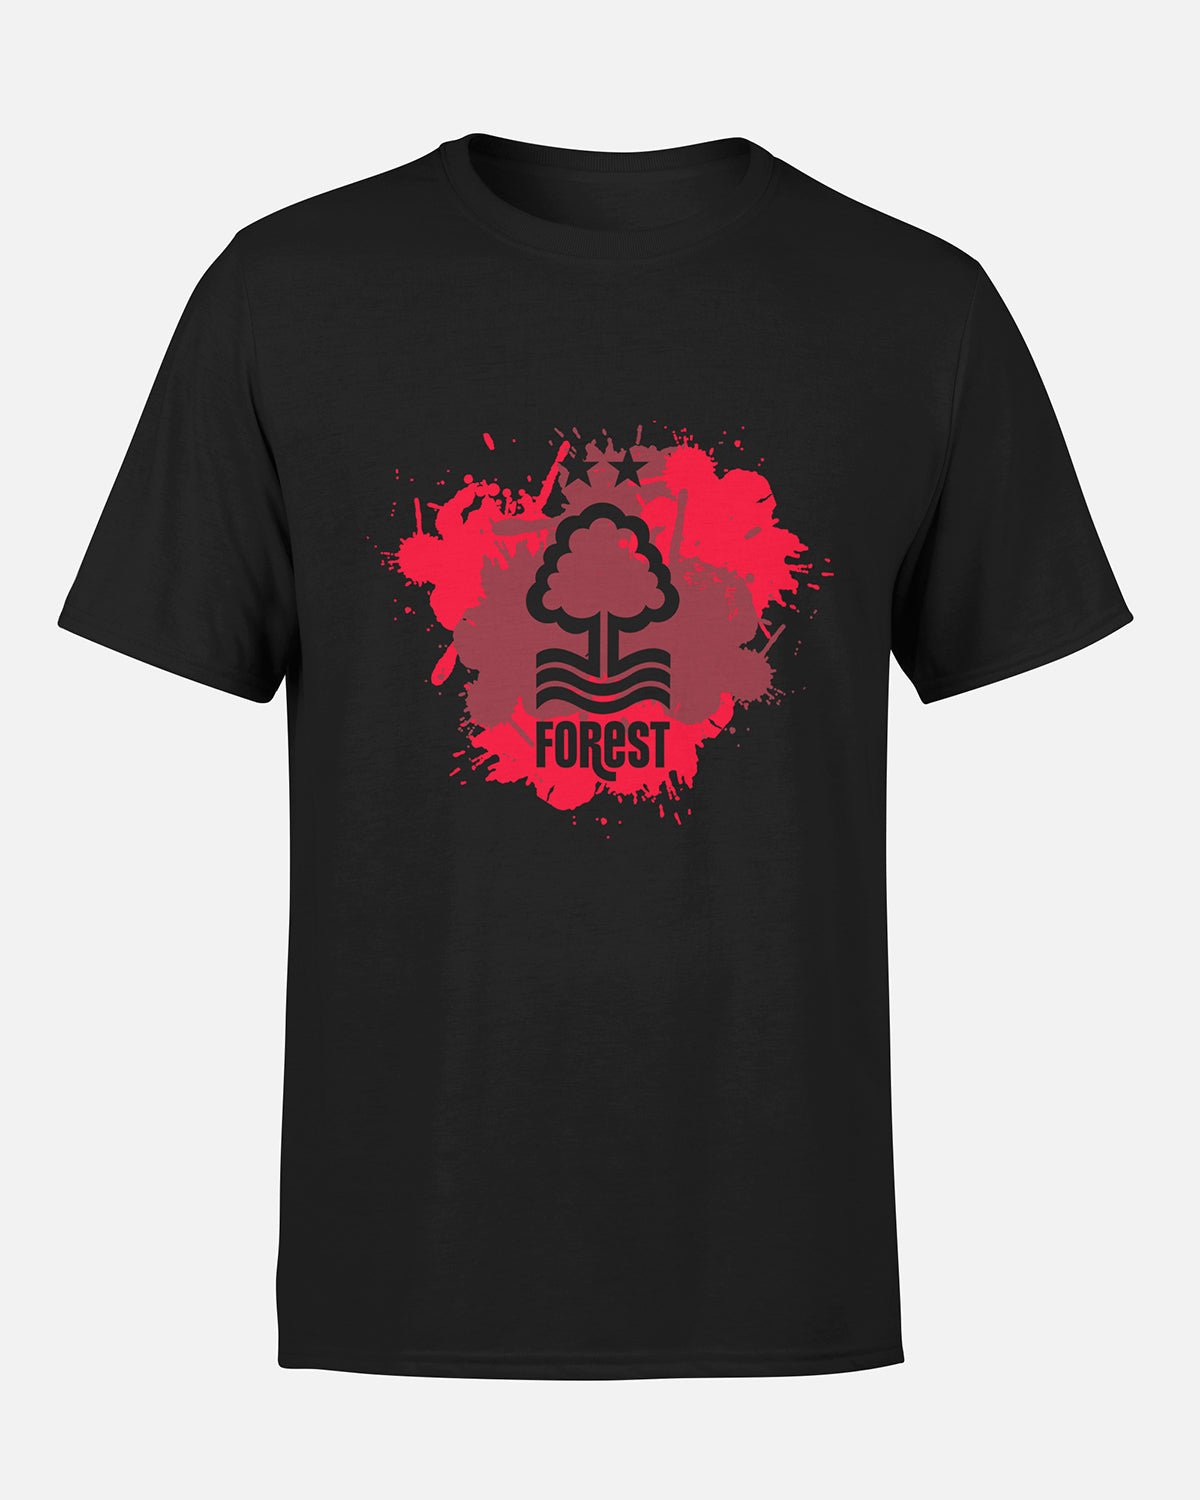 NFFC Junior Black Splatter Print T-Shirt - Nottingham Forest FC